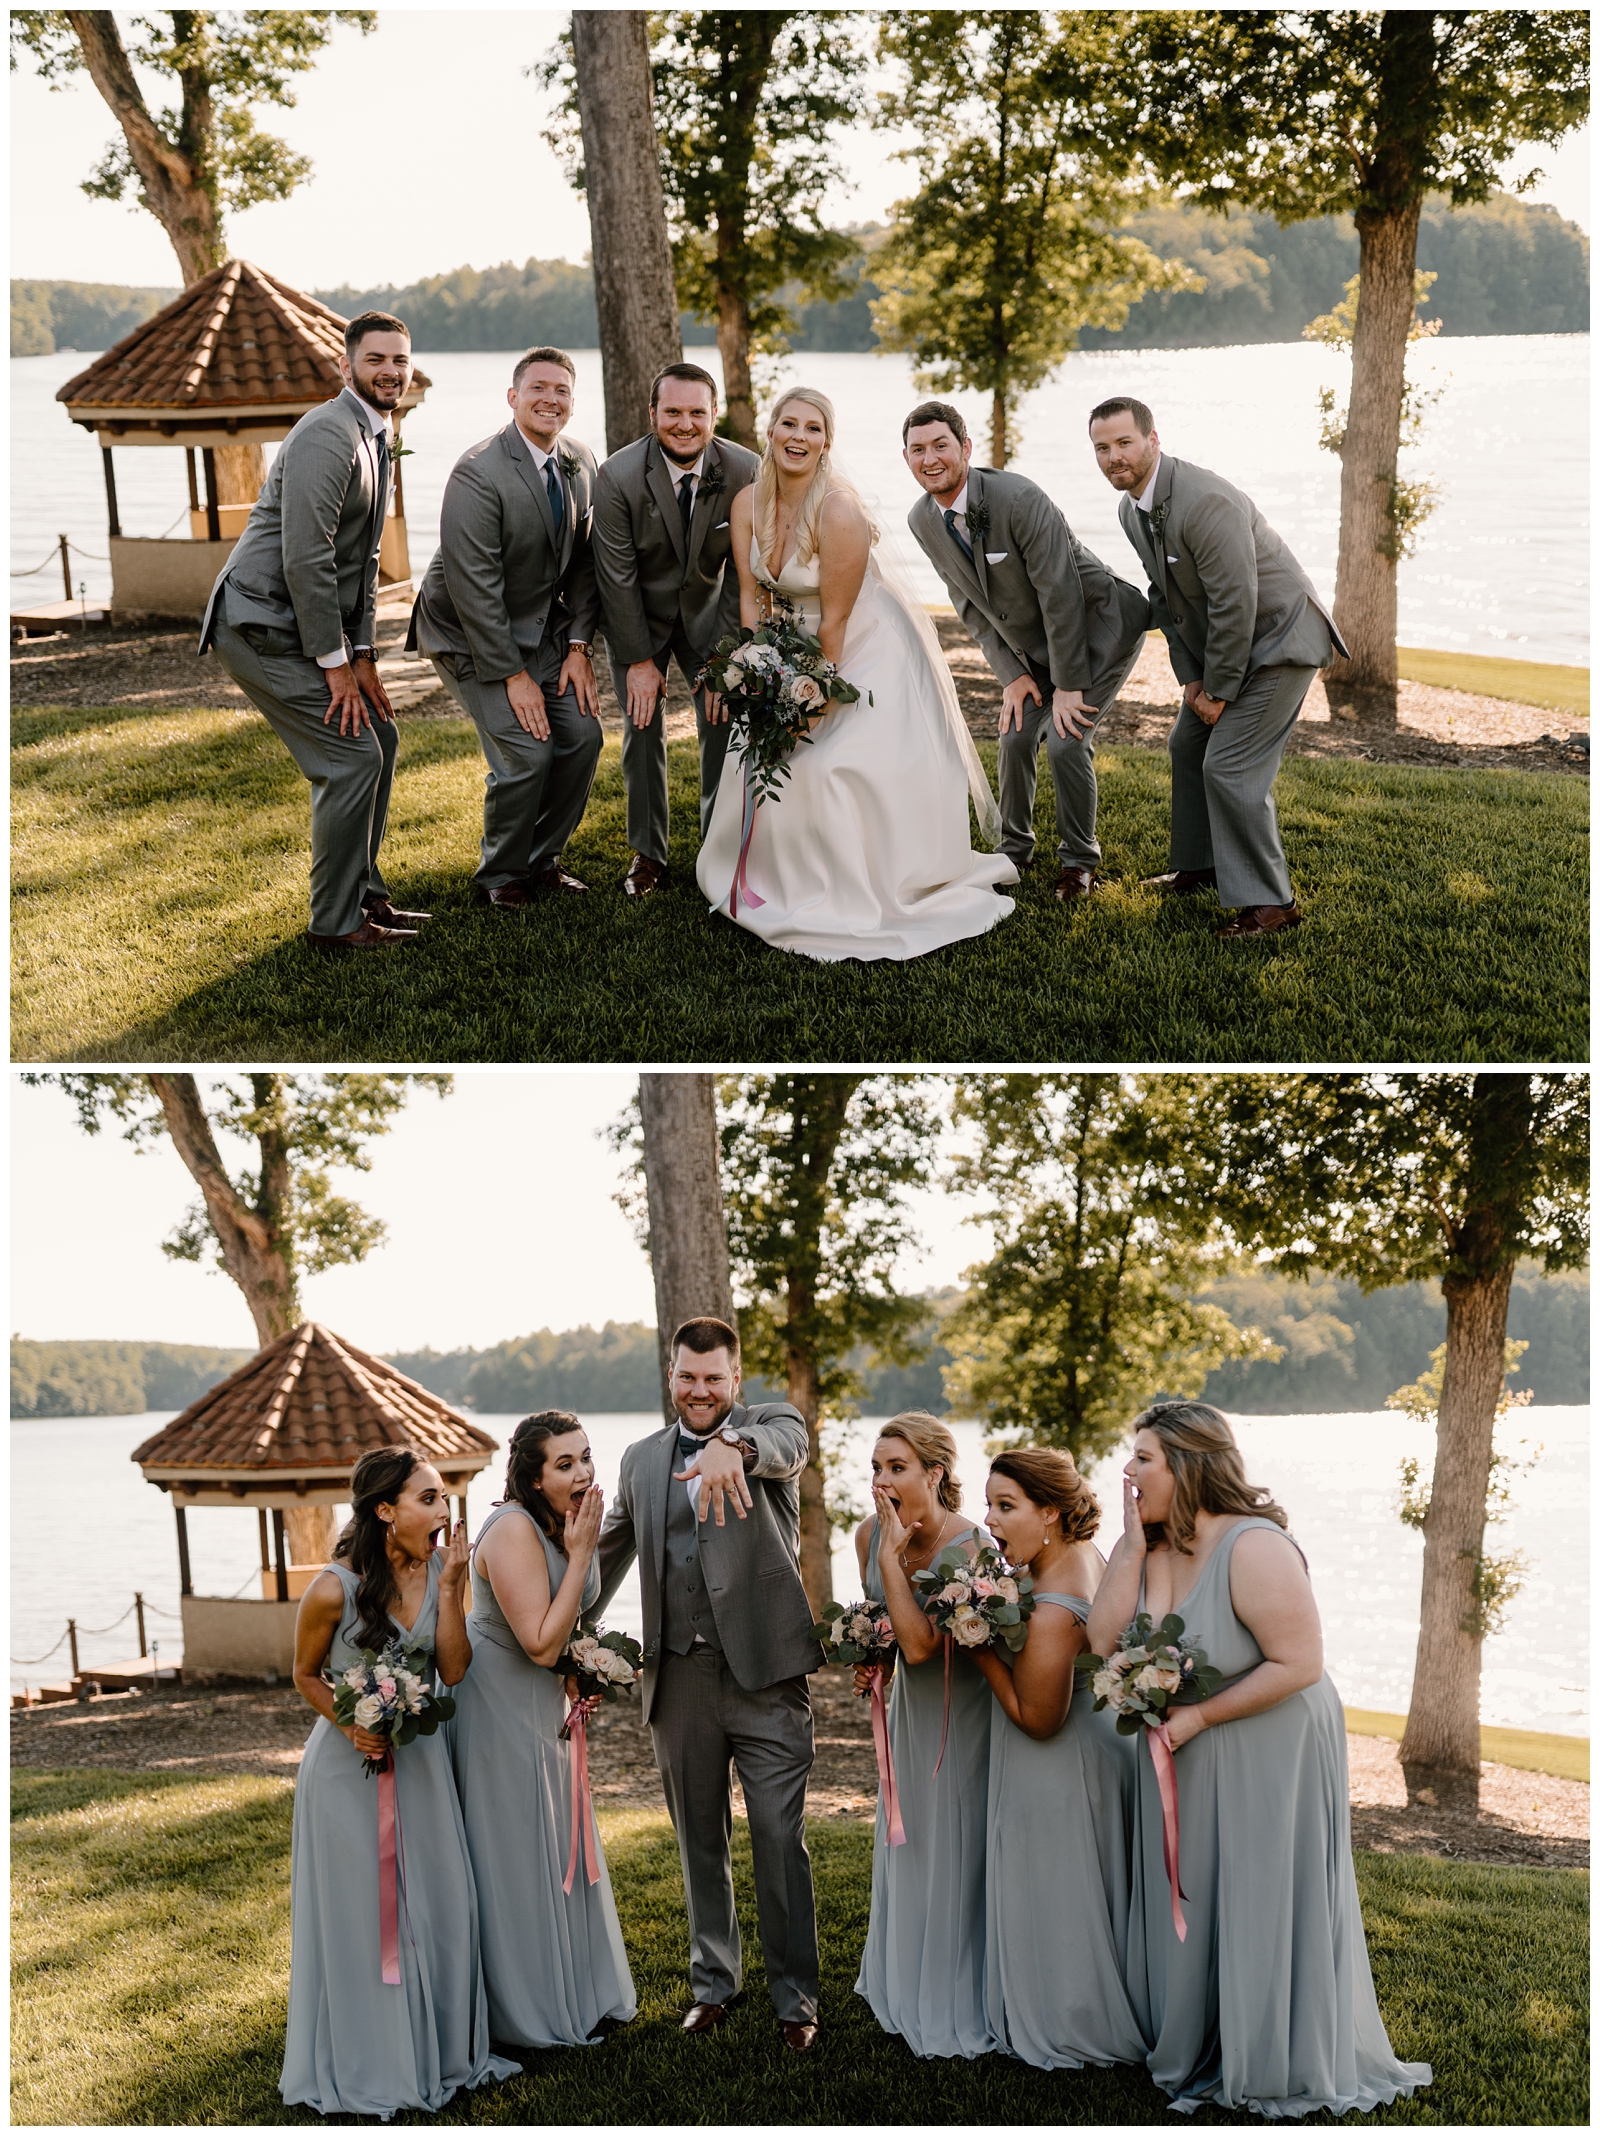 Fun wedding and bridal party portraits at North Carolina lakeside venue - by Greensboro, NC photographer